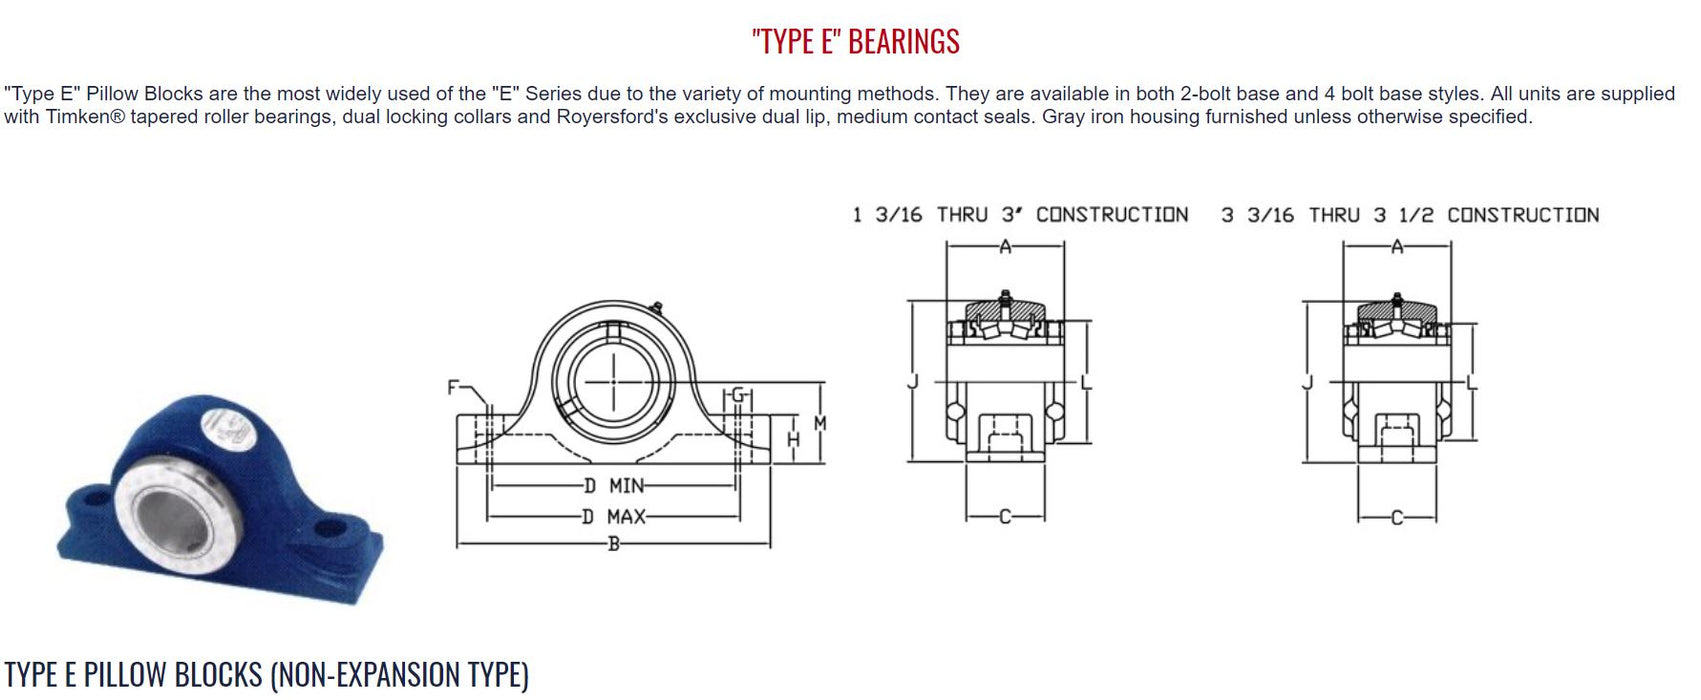 20-02-0108, Royersford TYPE E Pillow Block Bearing, 1-1/2 with Timken Tapered Roller Bearings